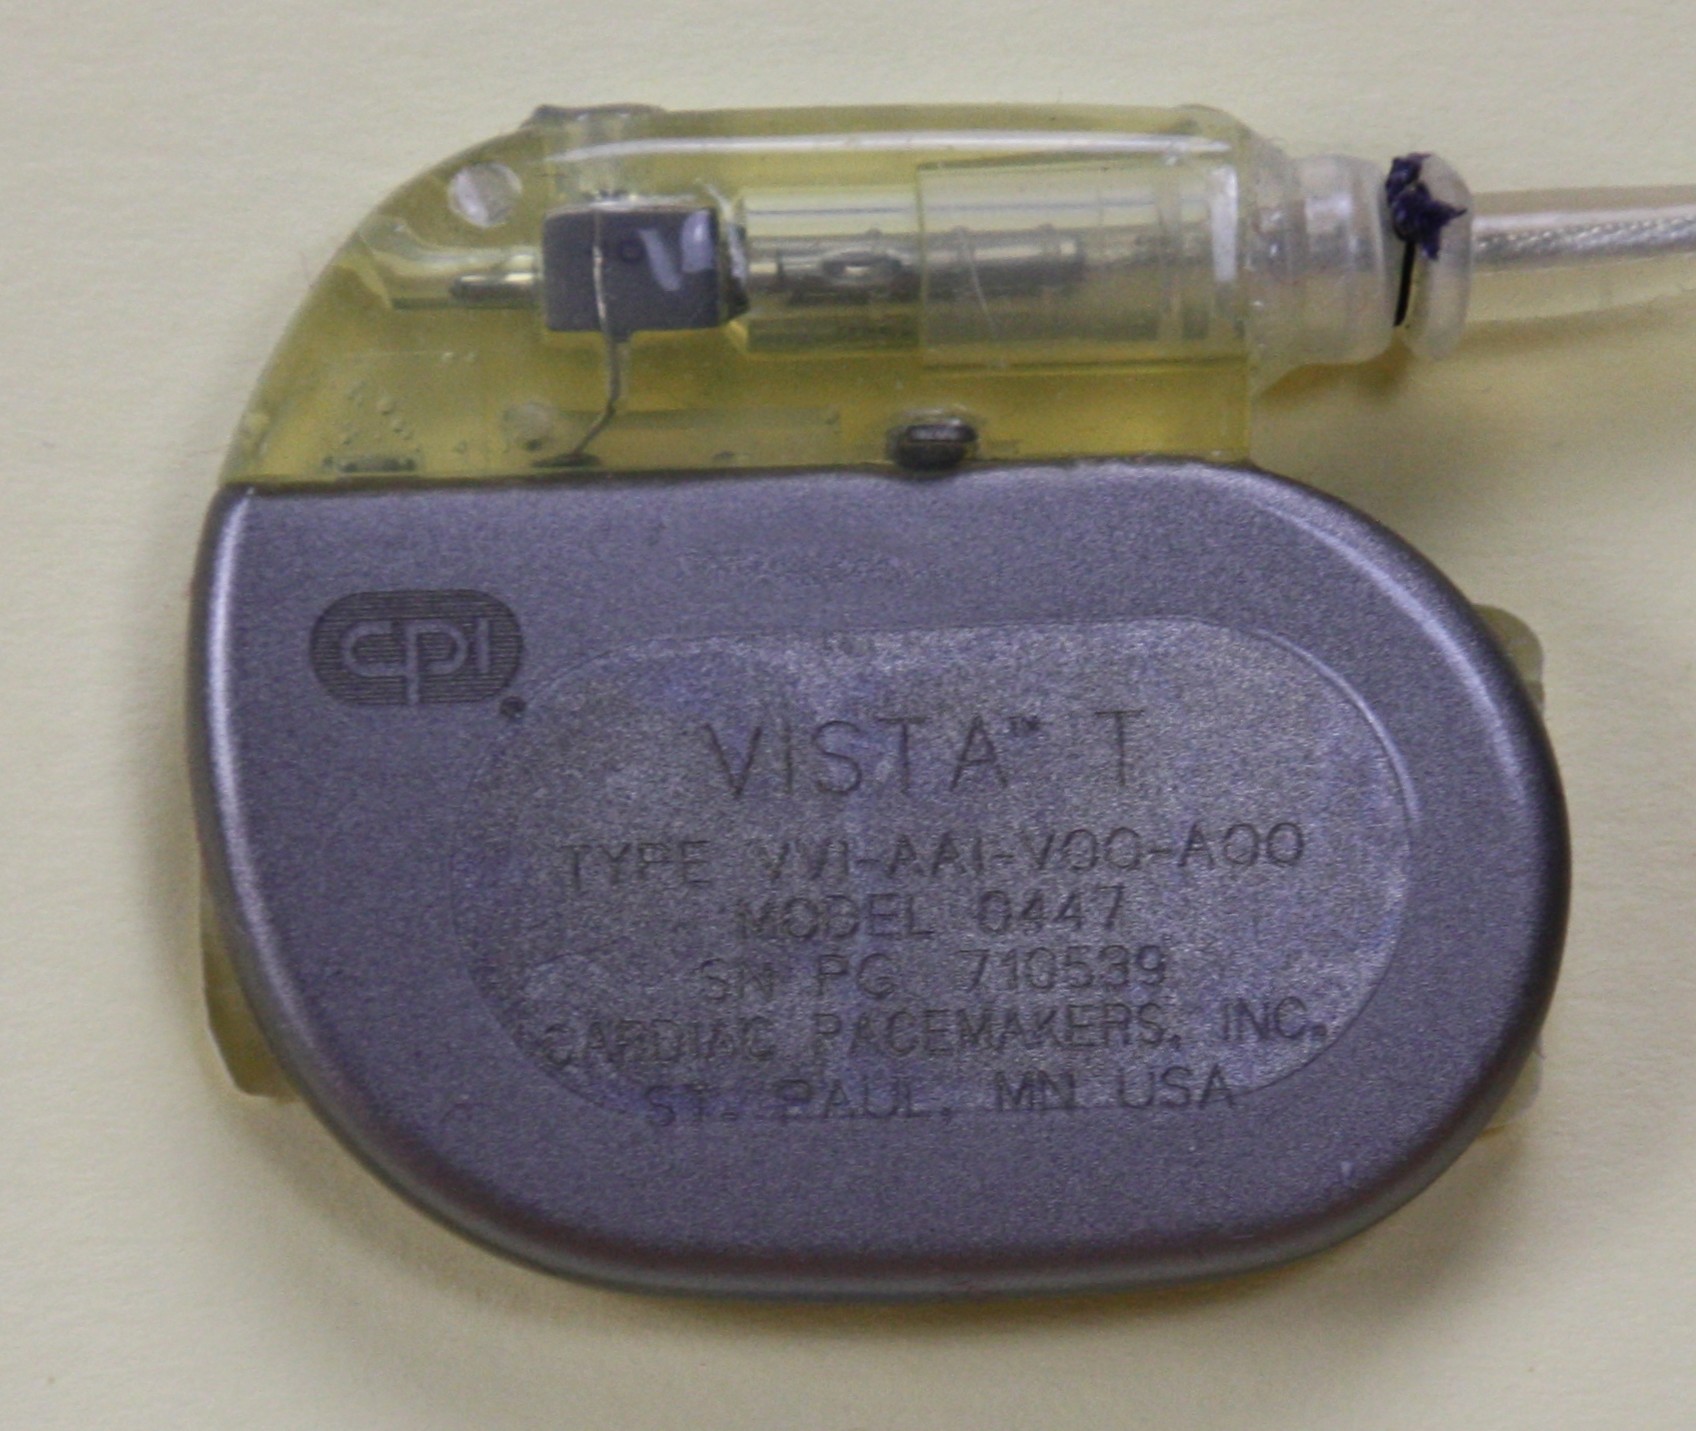 Herzschrittmacher-Implantat CPI, Vista T 0447 (Krankenhausmuseum Bielefeld e.V. CC BY-NC-SA)